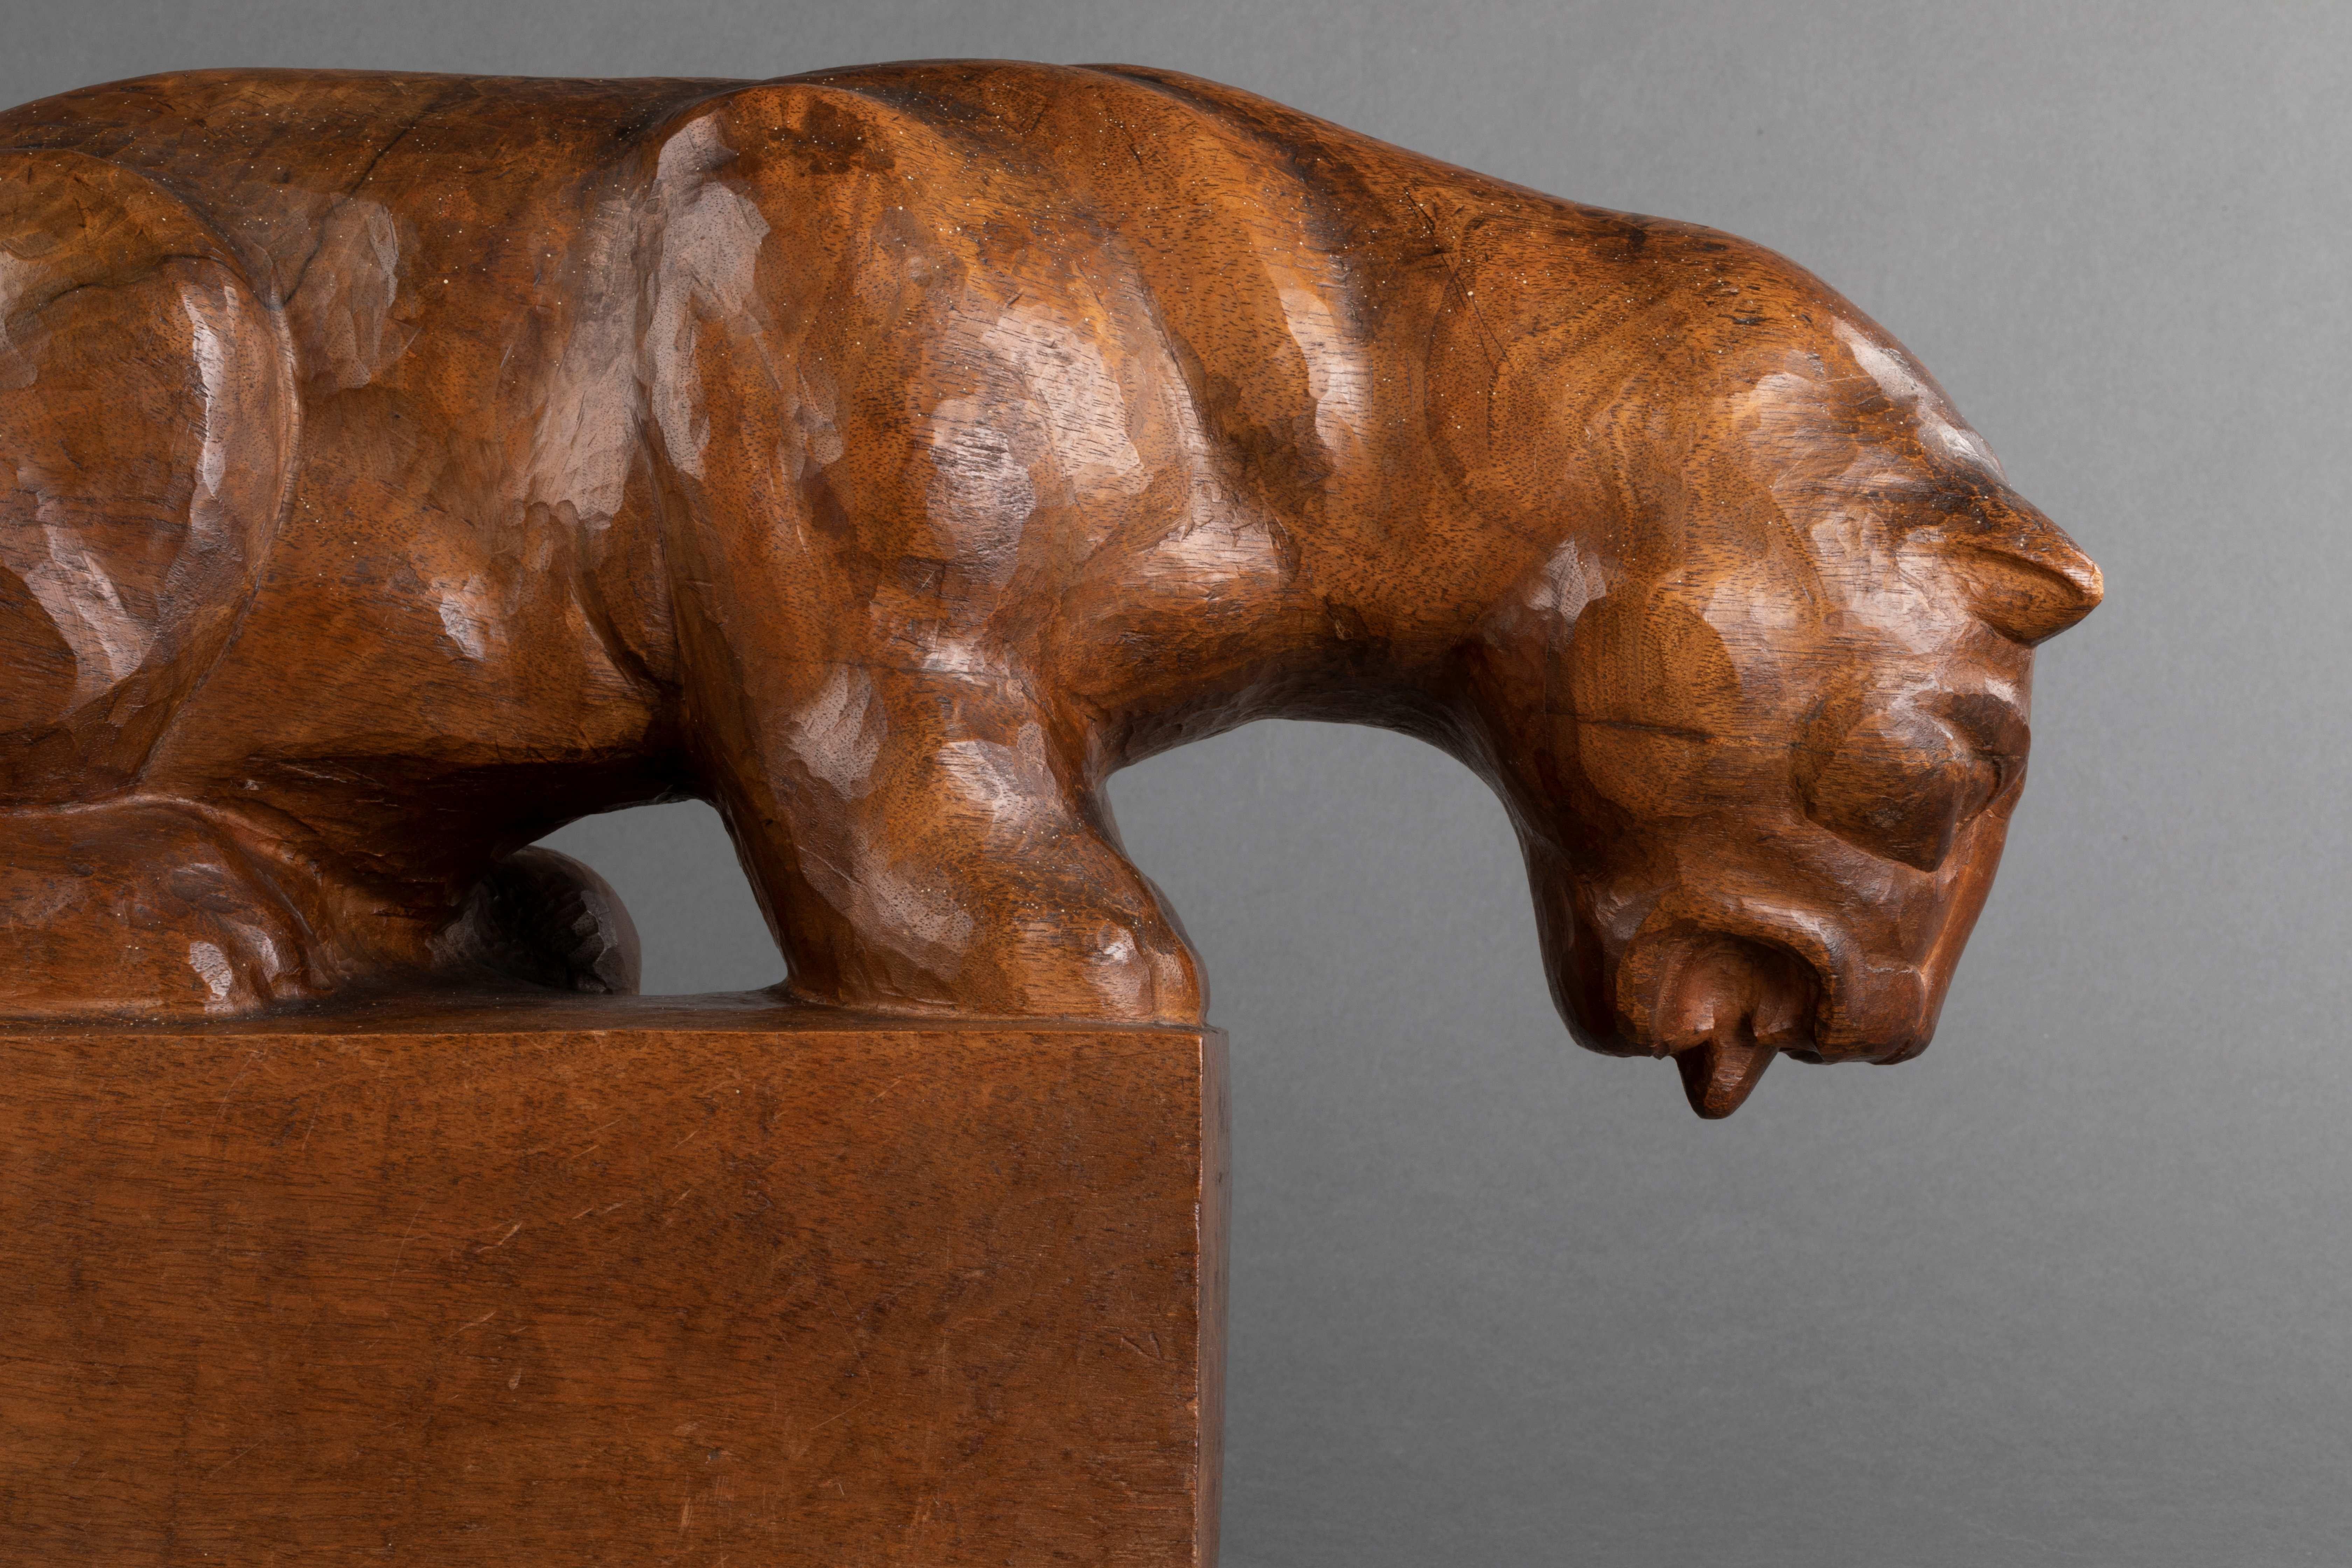 Wood Auguste Trémont(attrib.) : Lion cub drinking, carved wood sculpture c.1950 For Sale